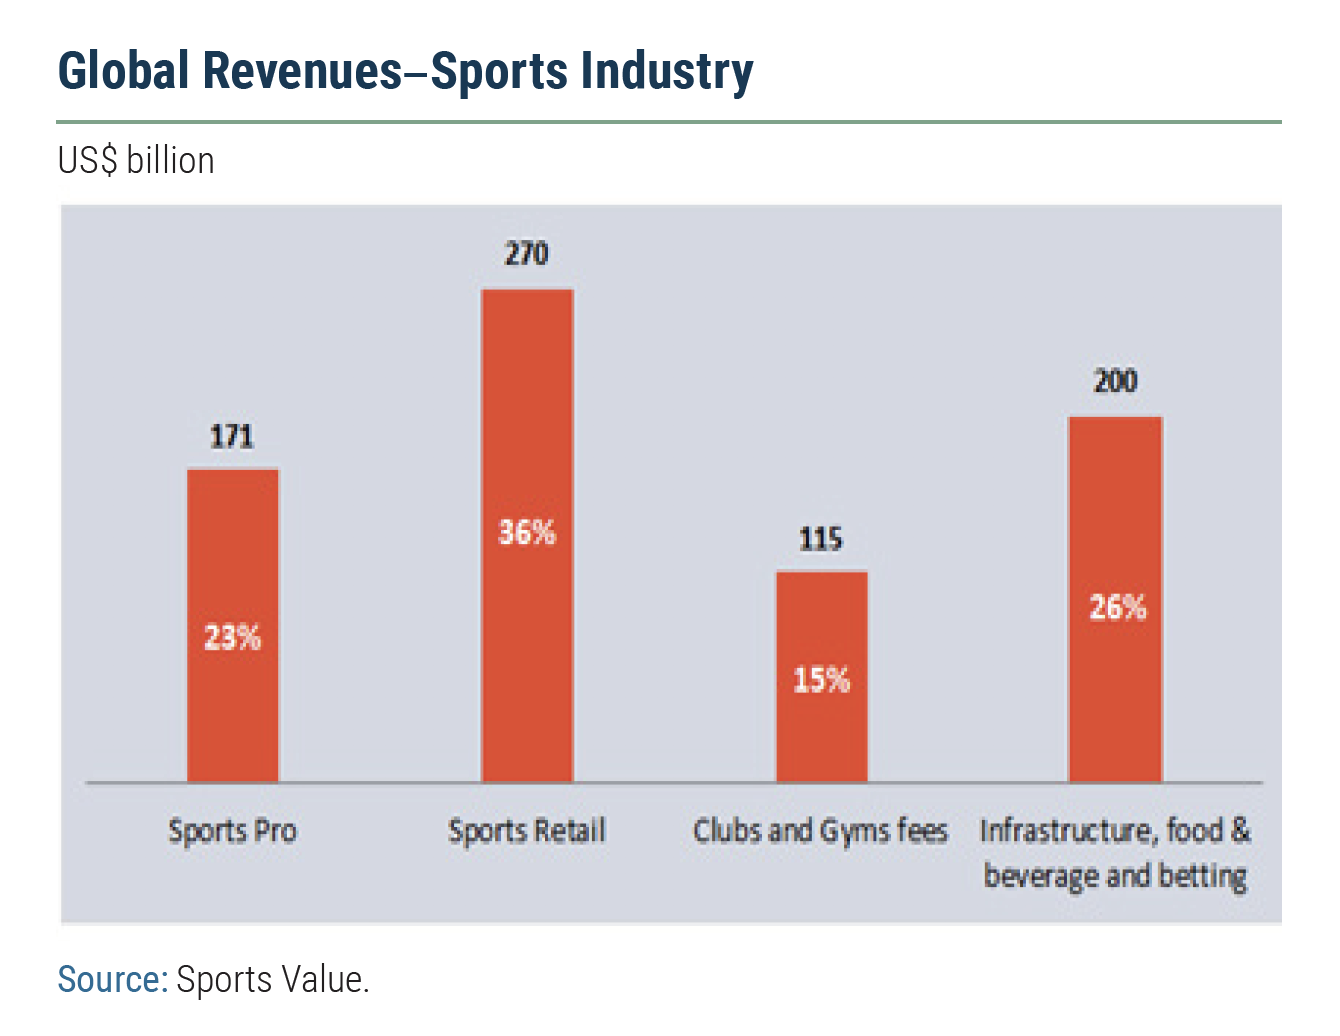 Figure 1: Global Revenue - Sports Industry